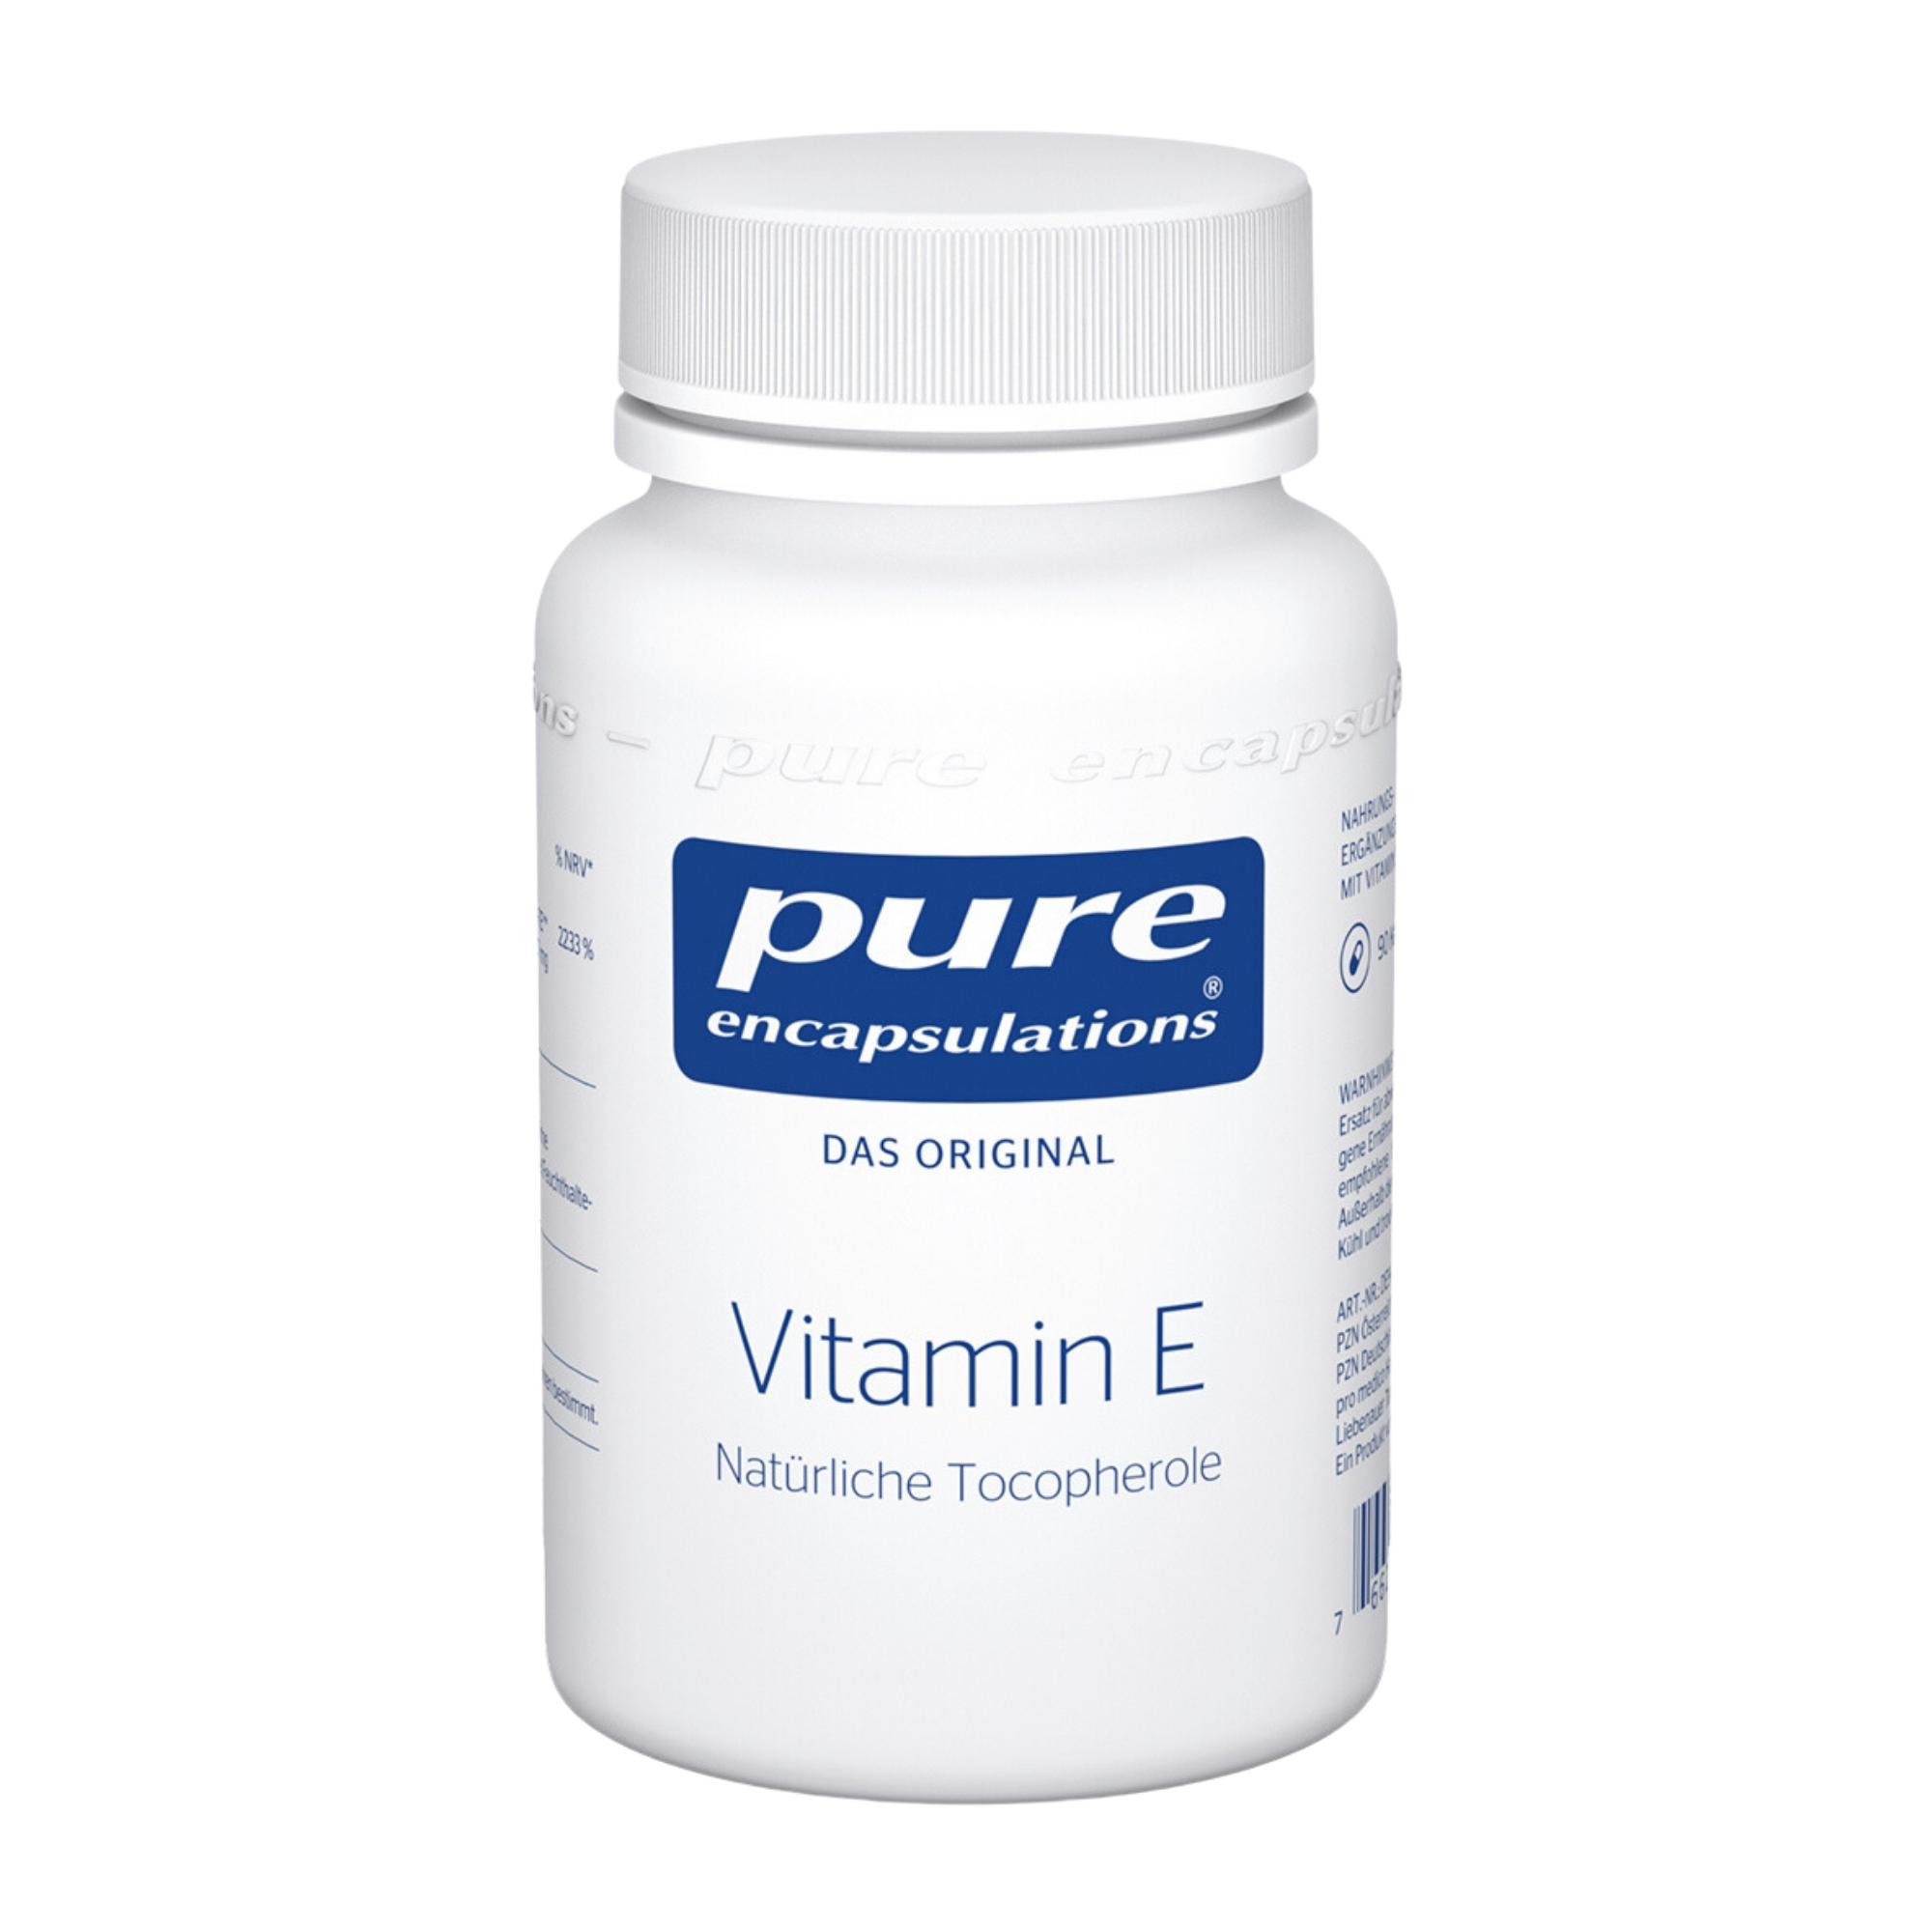 Nahrungsergänzungsmittel mit Vitamin E.